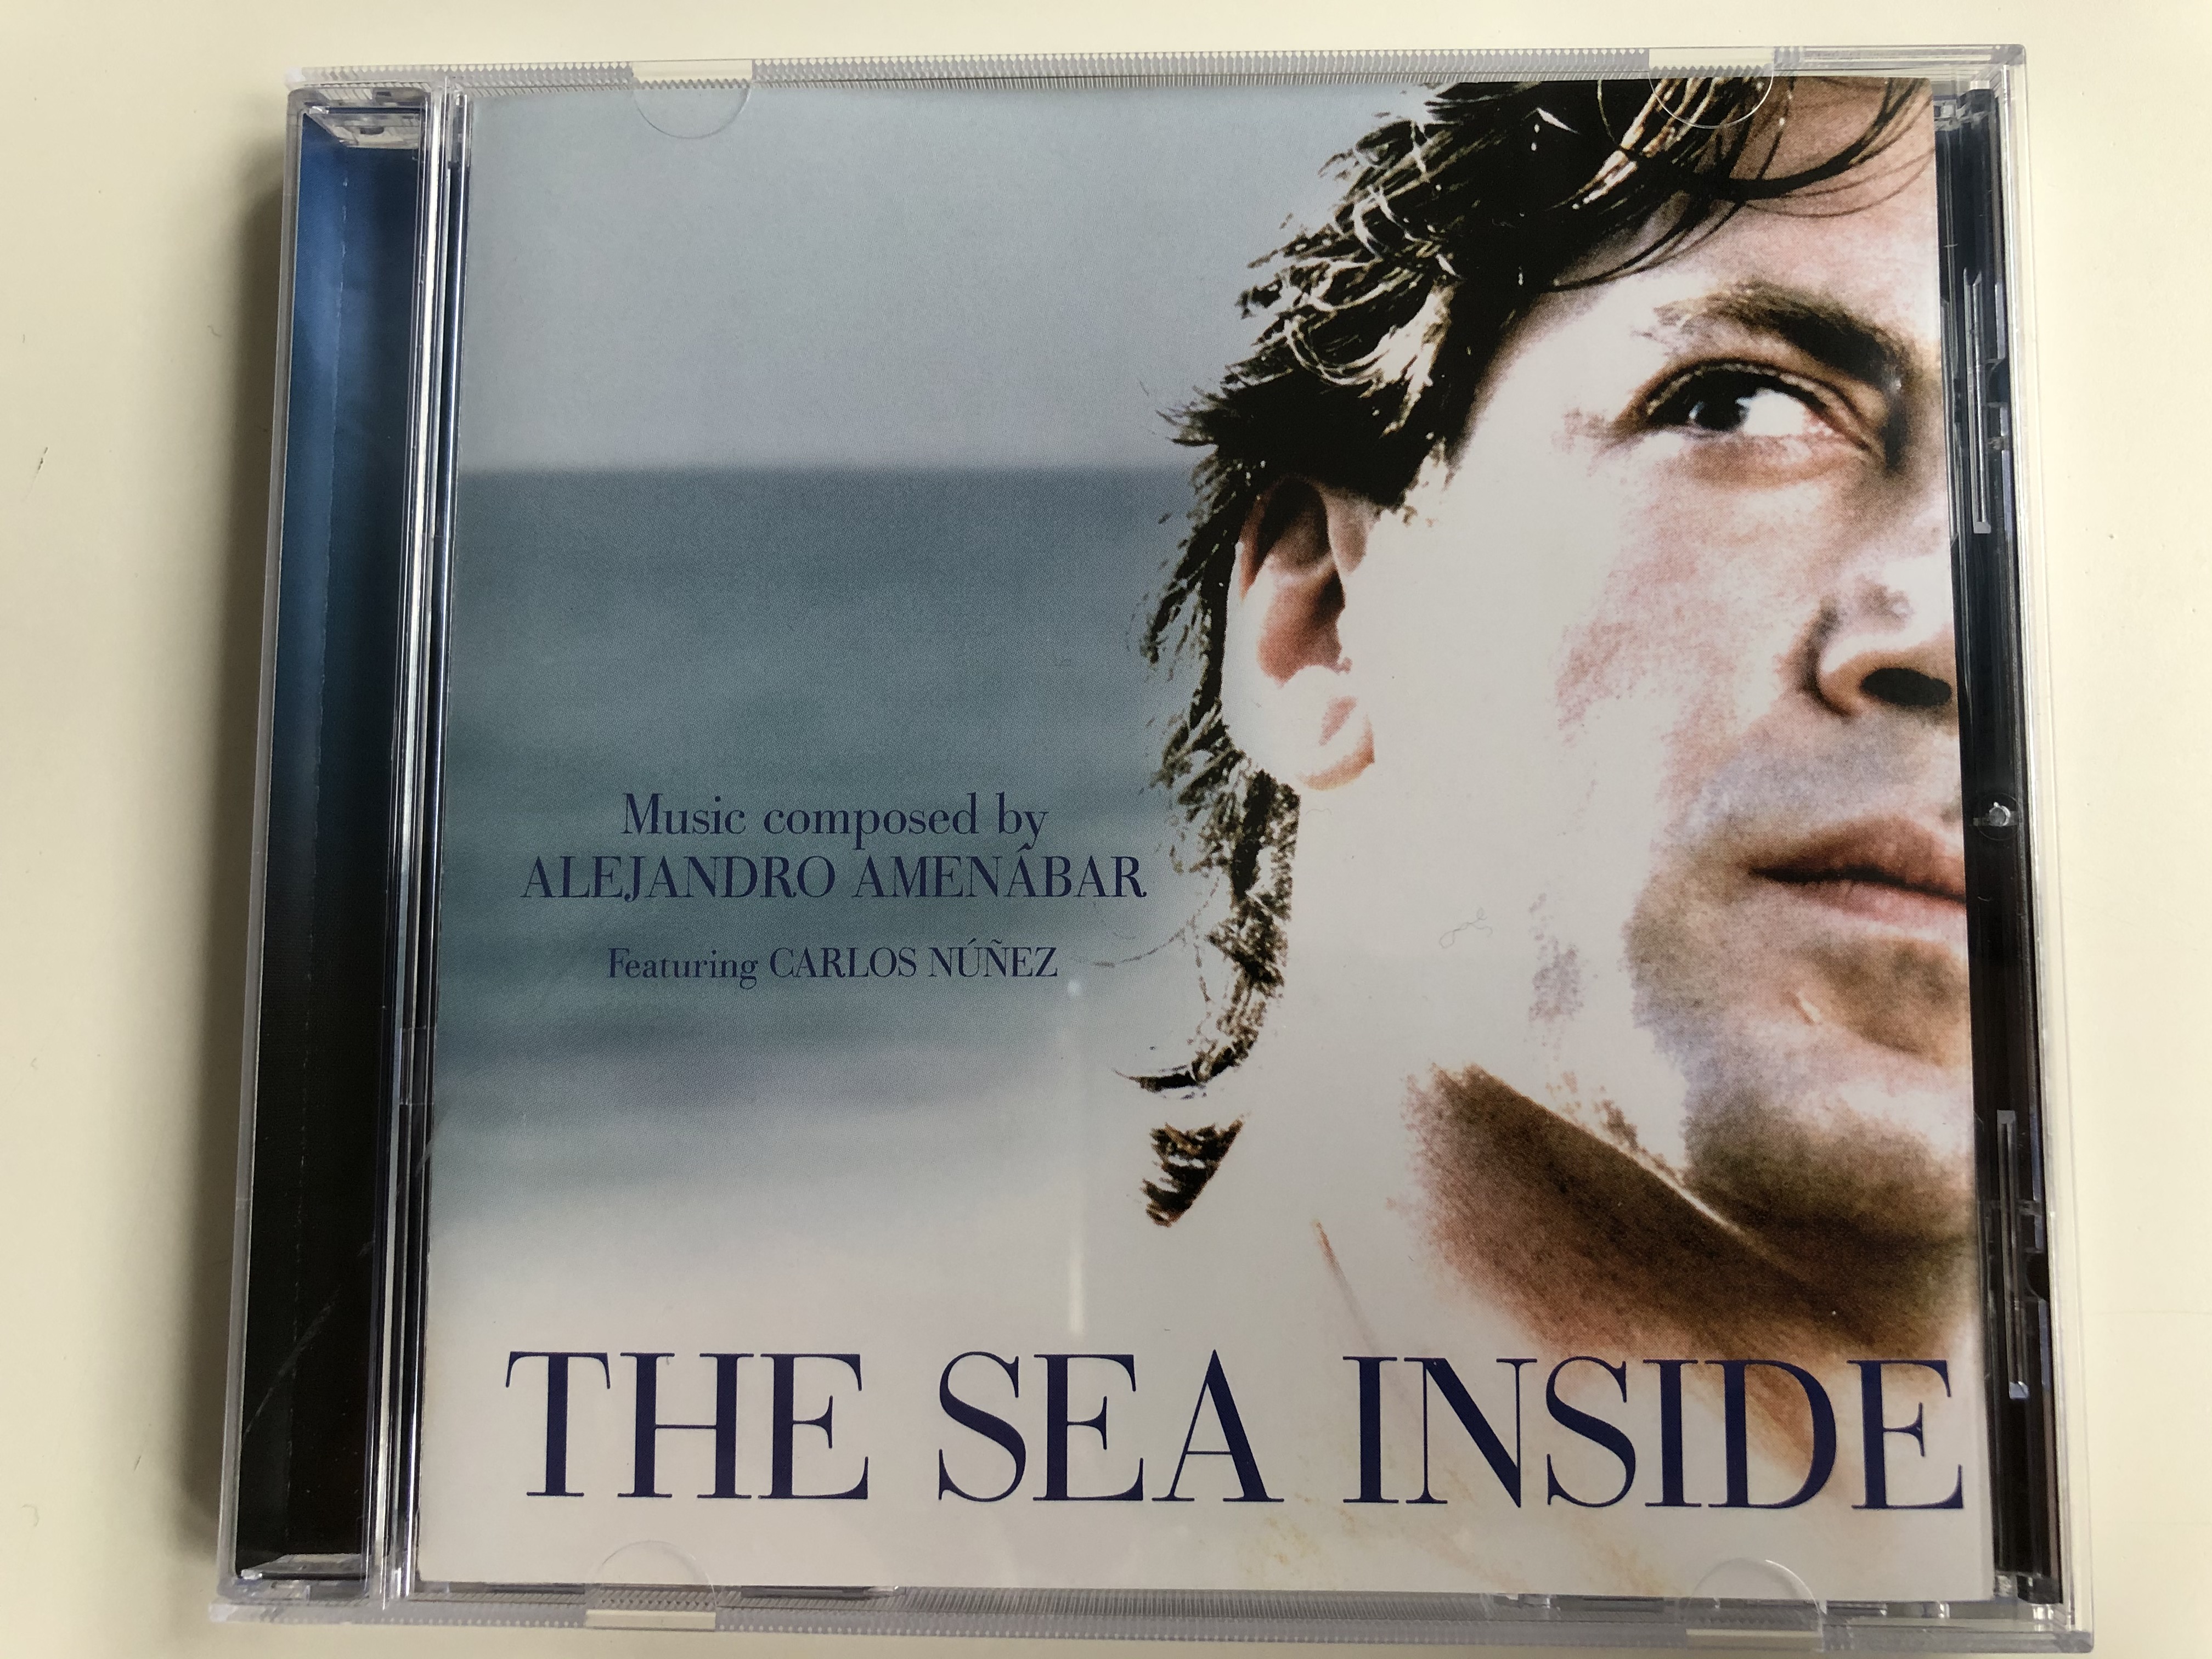 the-sea-inside-music-composed-by-alejandro-amen-bar-featuring-carlos-nunez-sony-music-audio-cd-smm-517842-9-1-.jpg